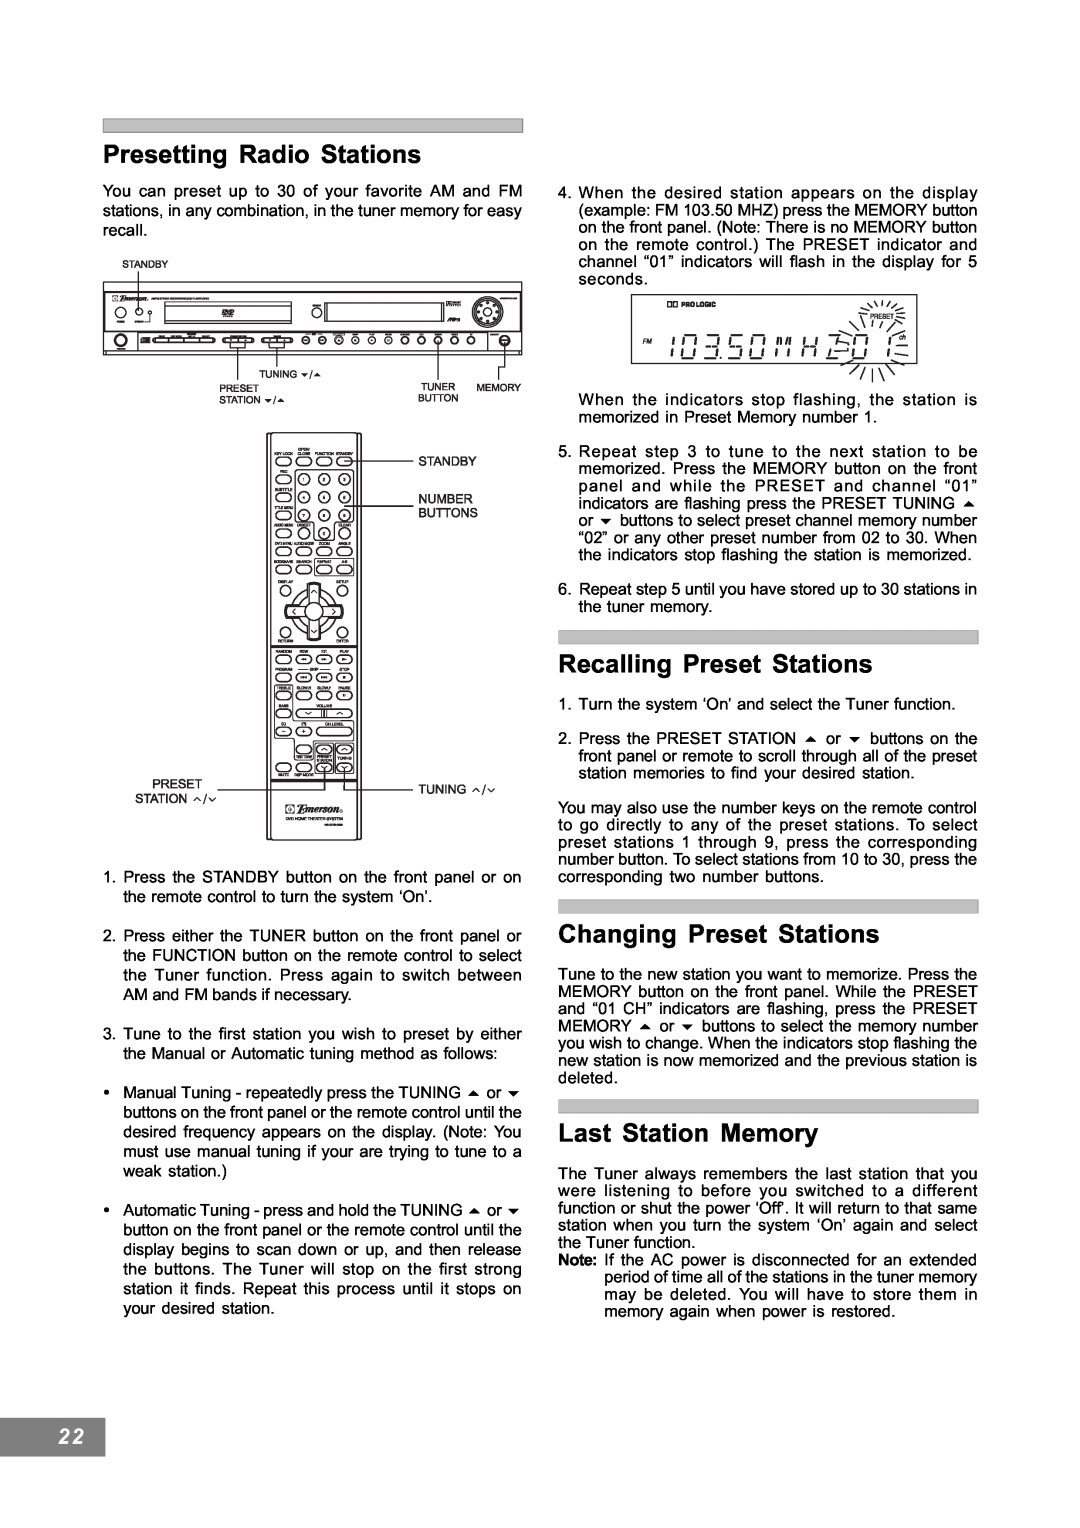 Emerson AV101 manual Presetting Radio Stations, Recalling Preset Stations, Changing Preset Stations, Last Station Memory 